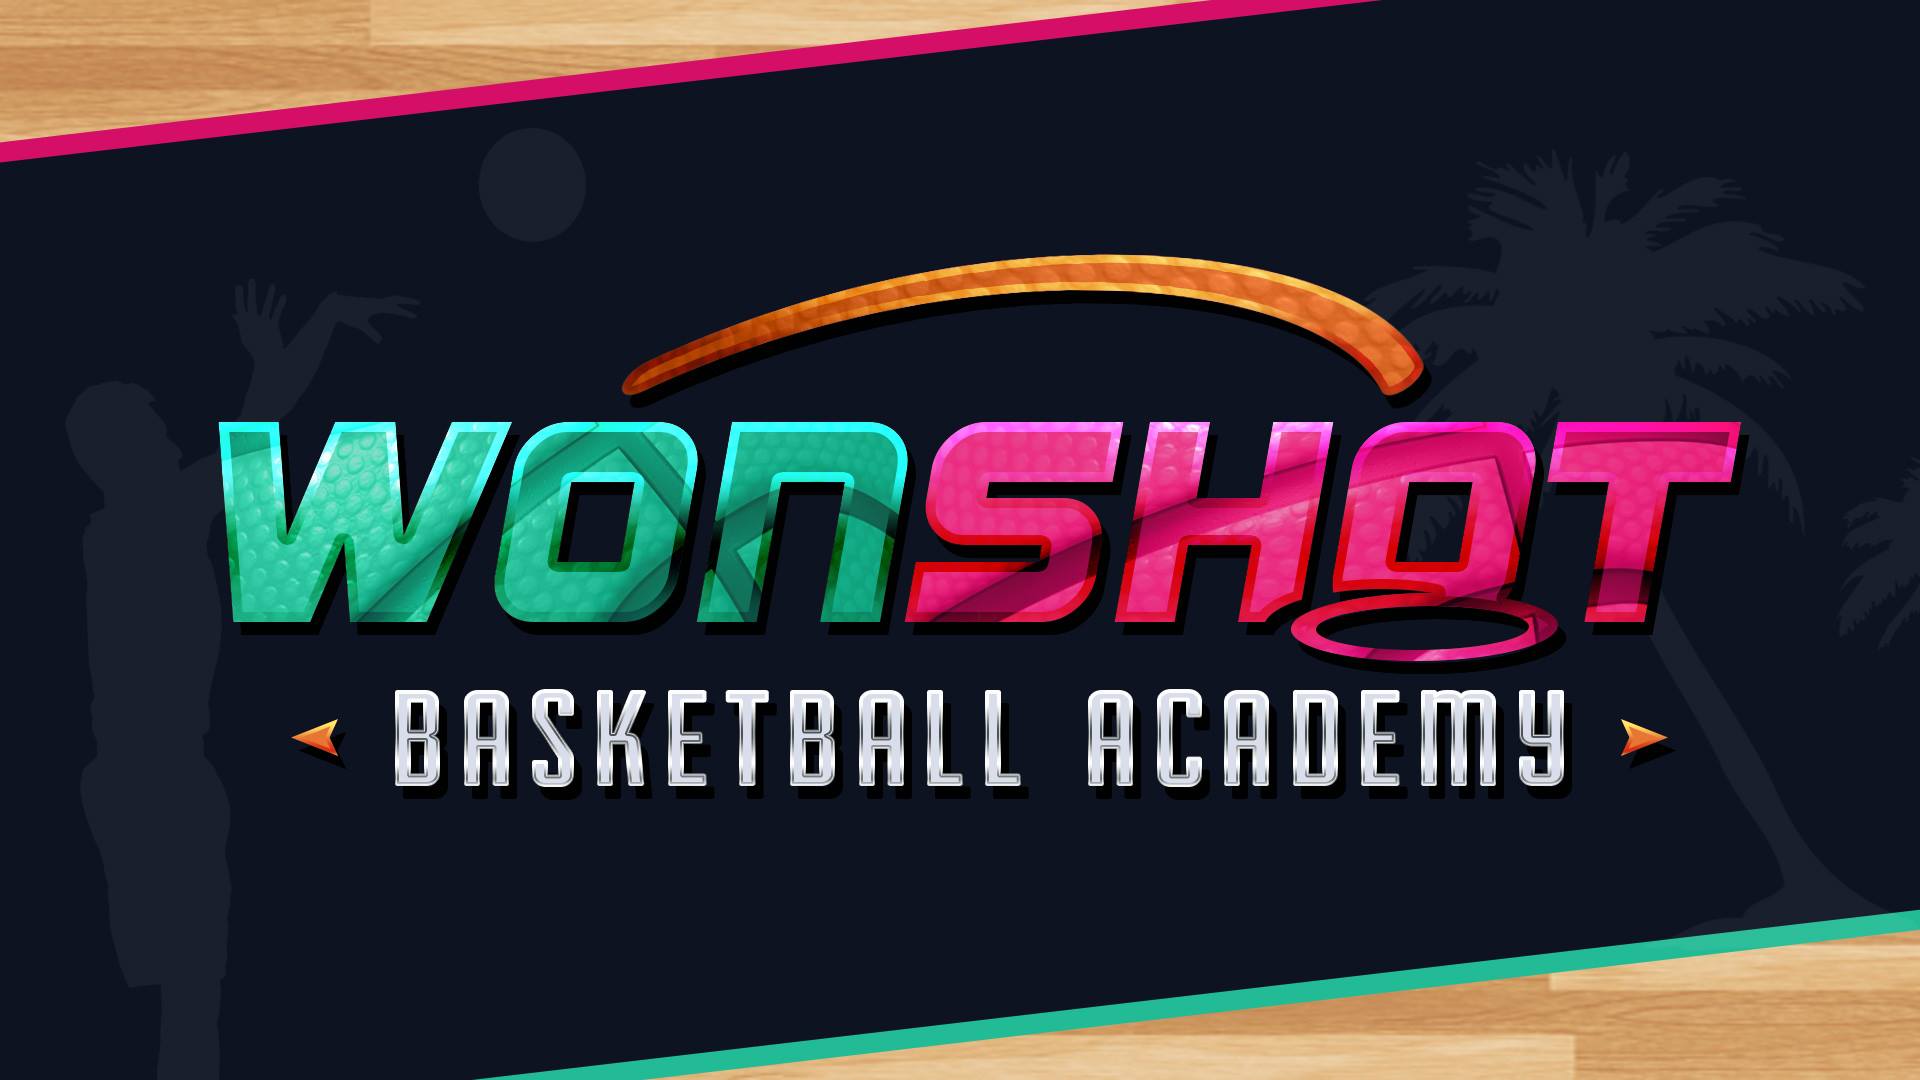 wonshot basketball academy logo .jpg